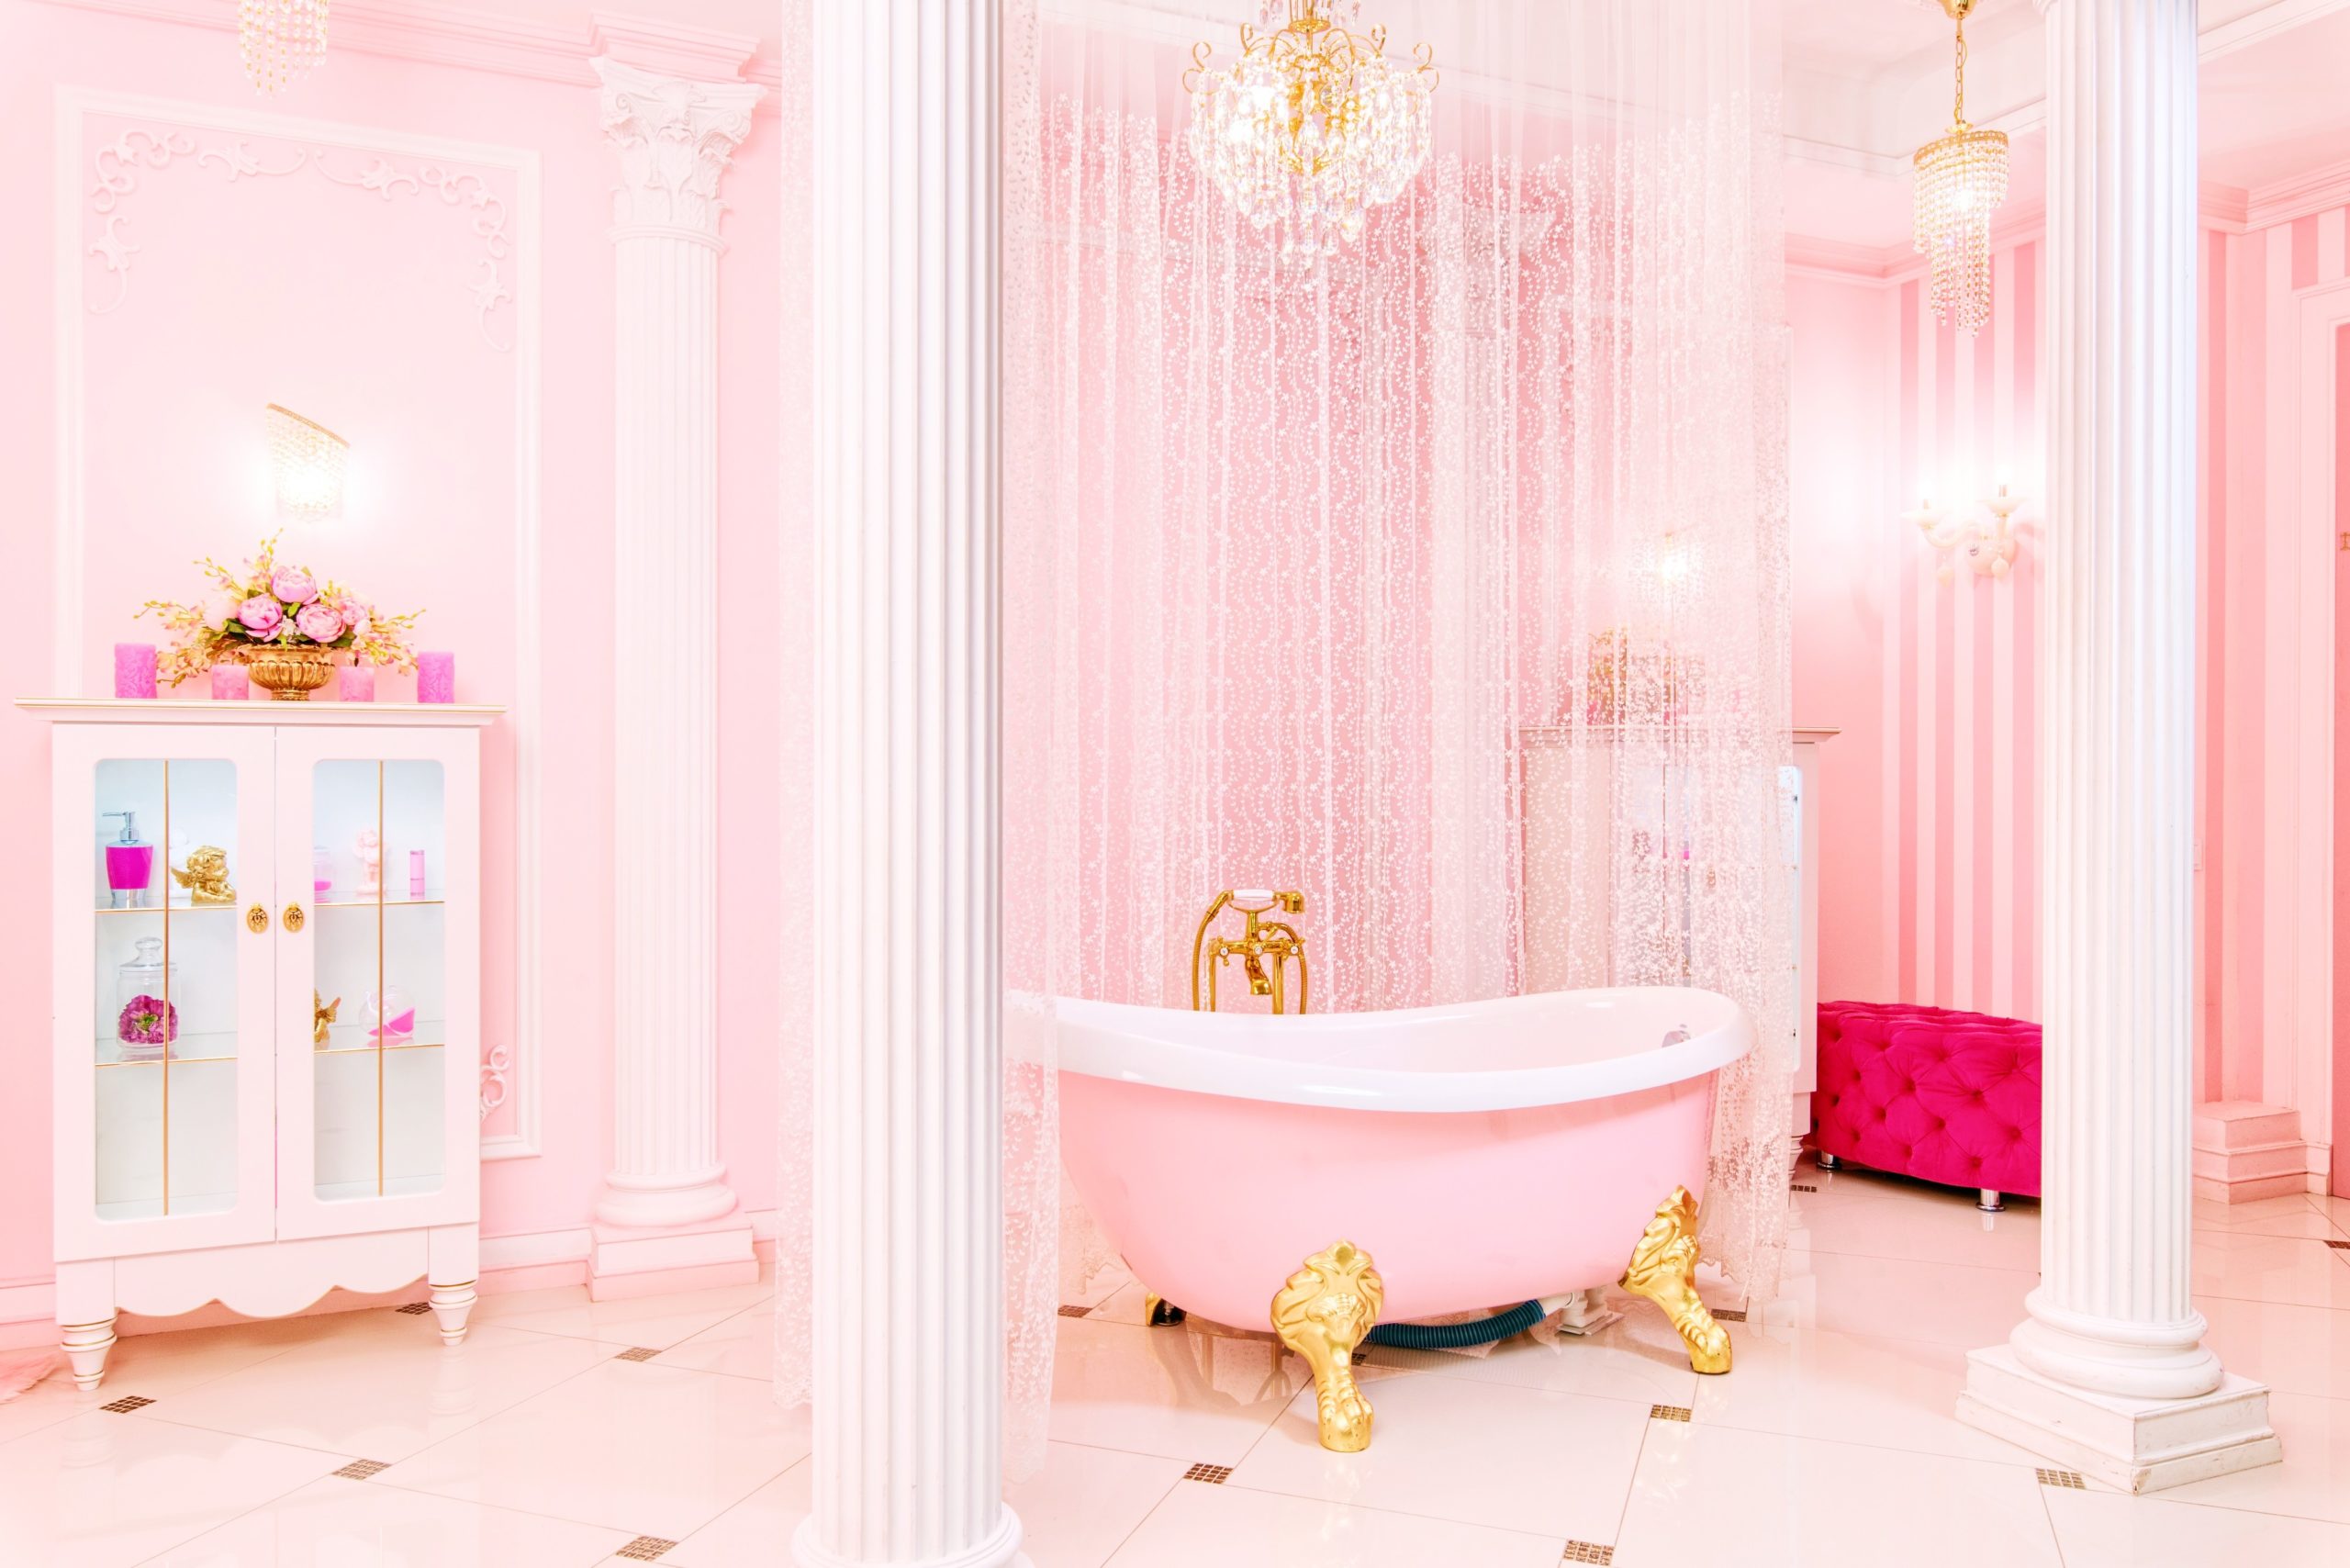 <img src="pink.jpg" alt="pink luxury bath in royal bathroom"/> 